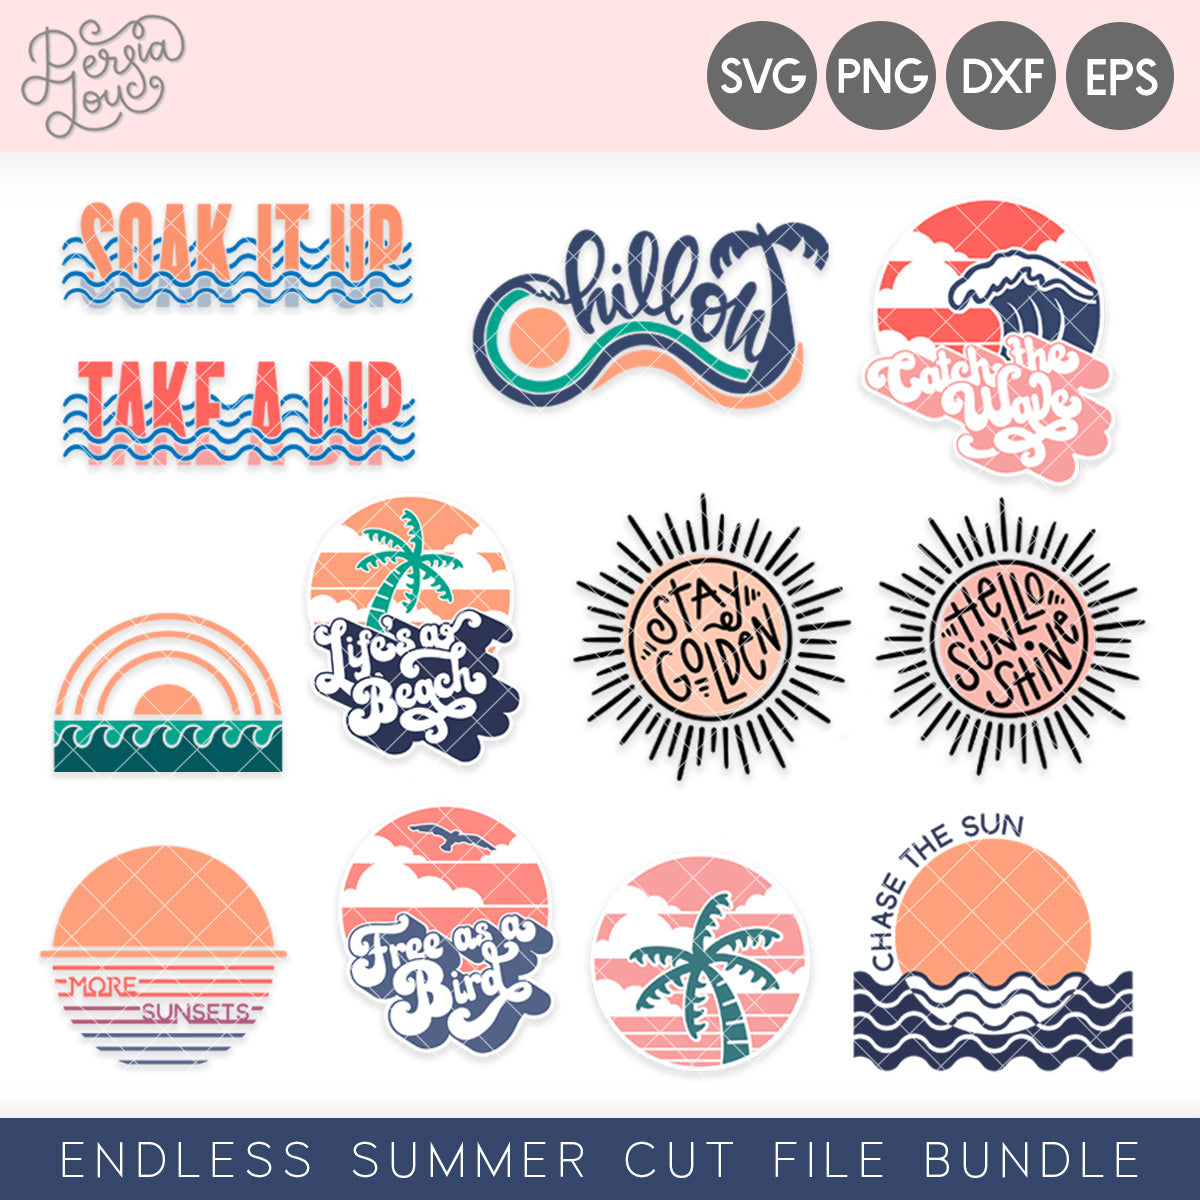 Download Endless Summer Svg Cut File Bundle Persia Lou